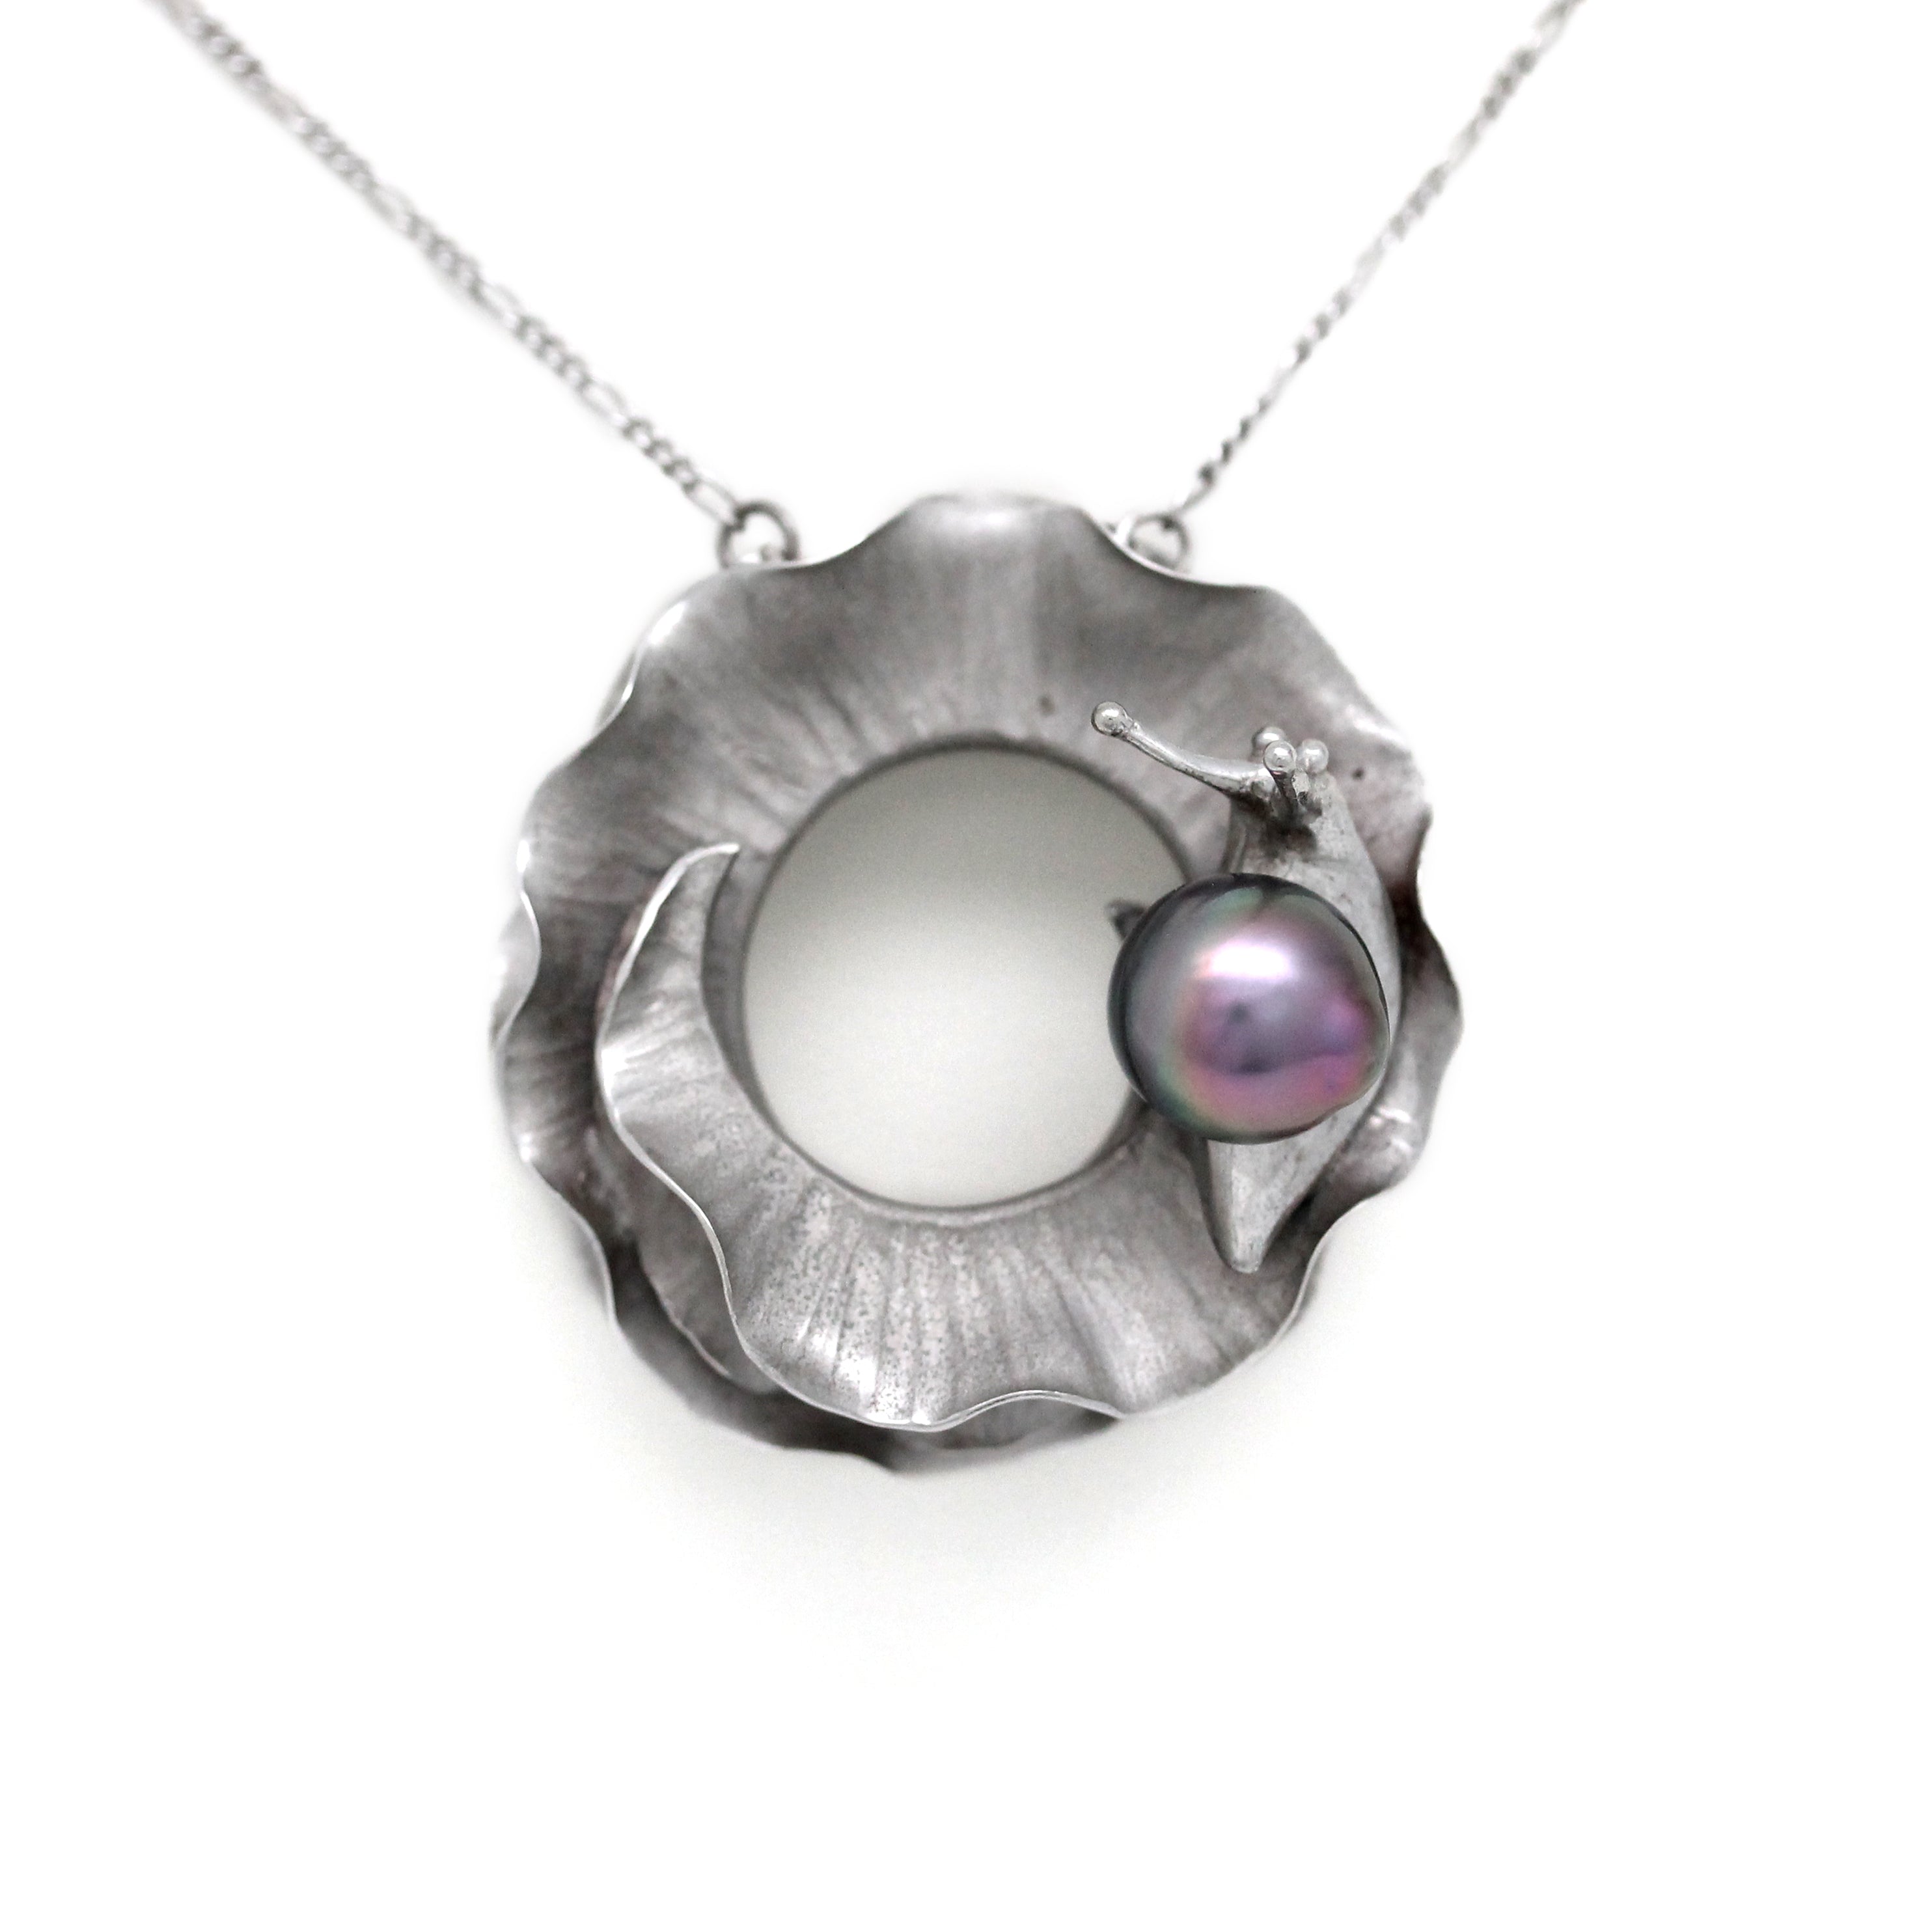 "Travesia" Stunning Multicolored Cortez Pearl on Silver Necklace by "Hector Salgado"